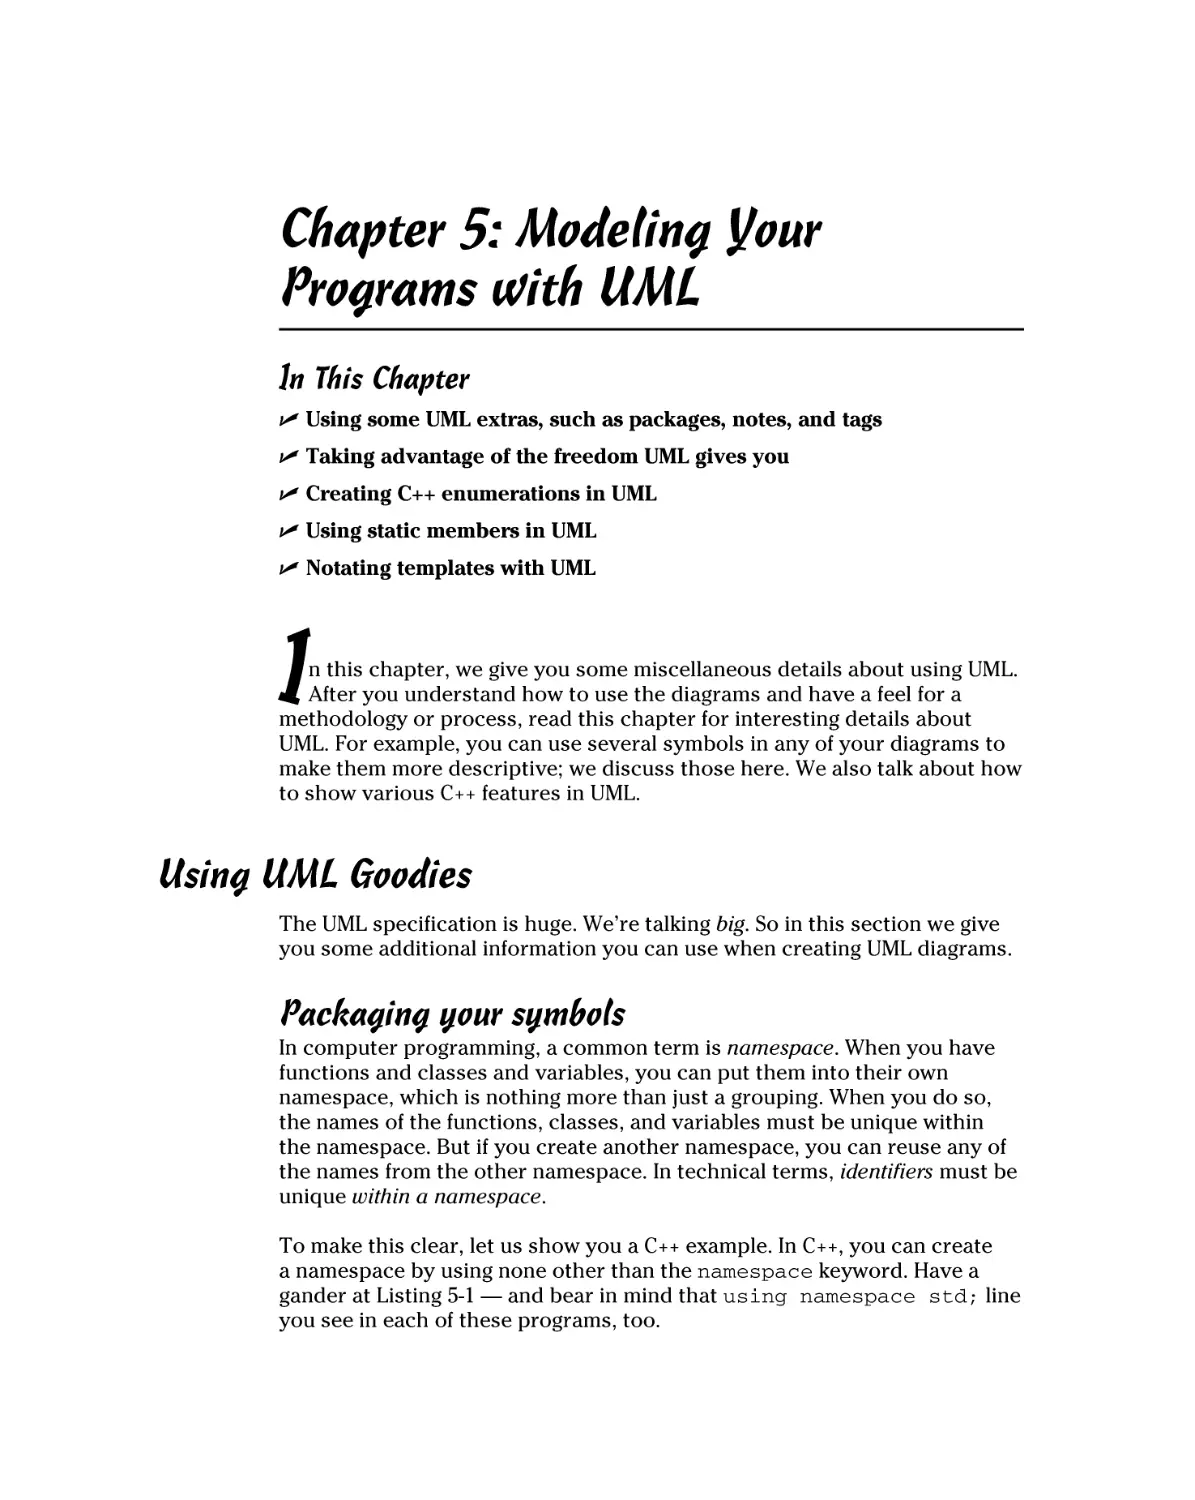 Chapter 5
Using UML Goodies